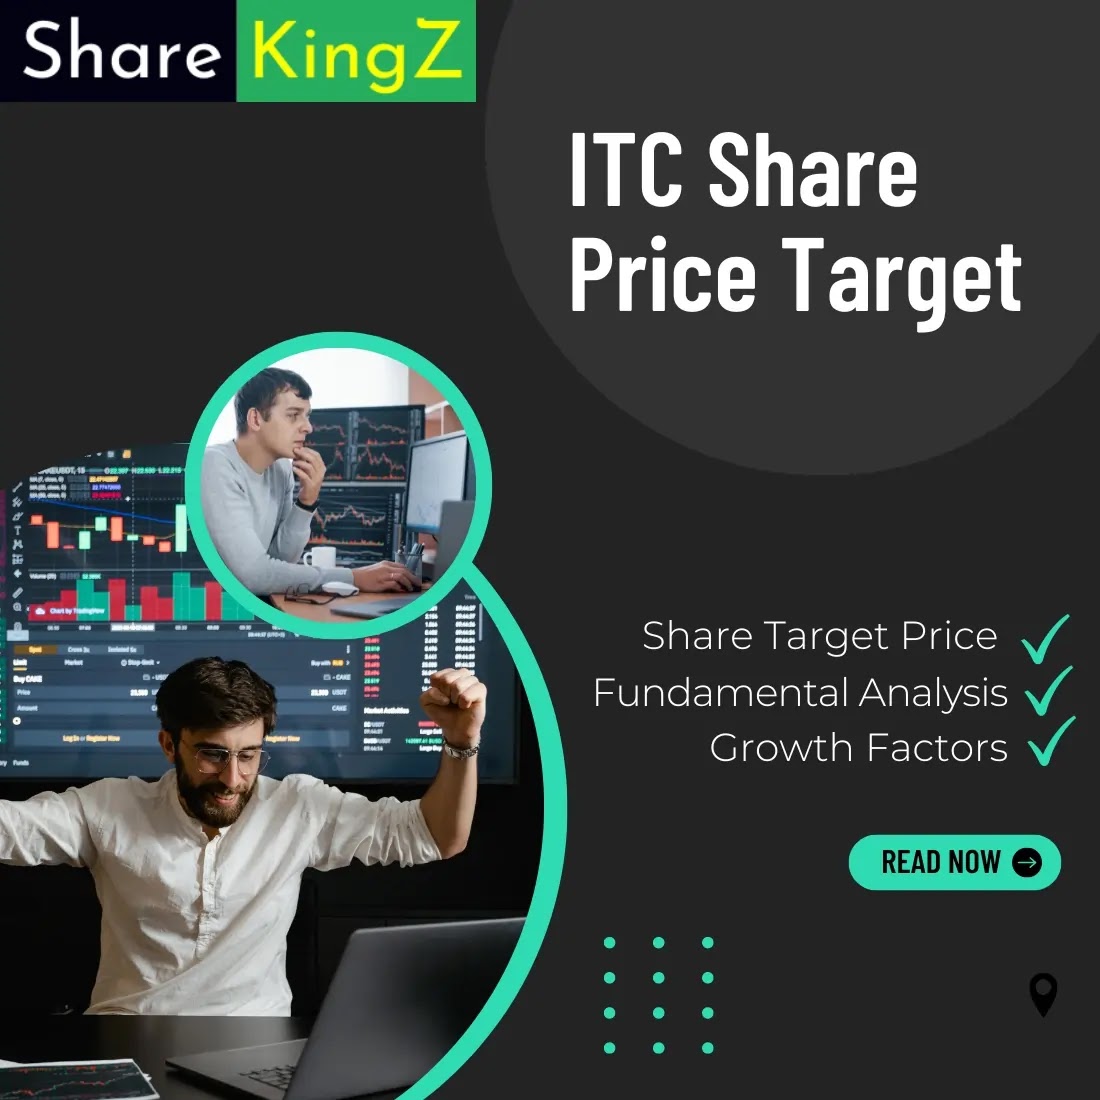 ITC Share Price Target